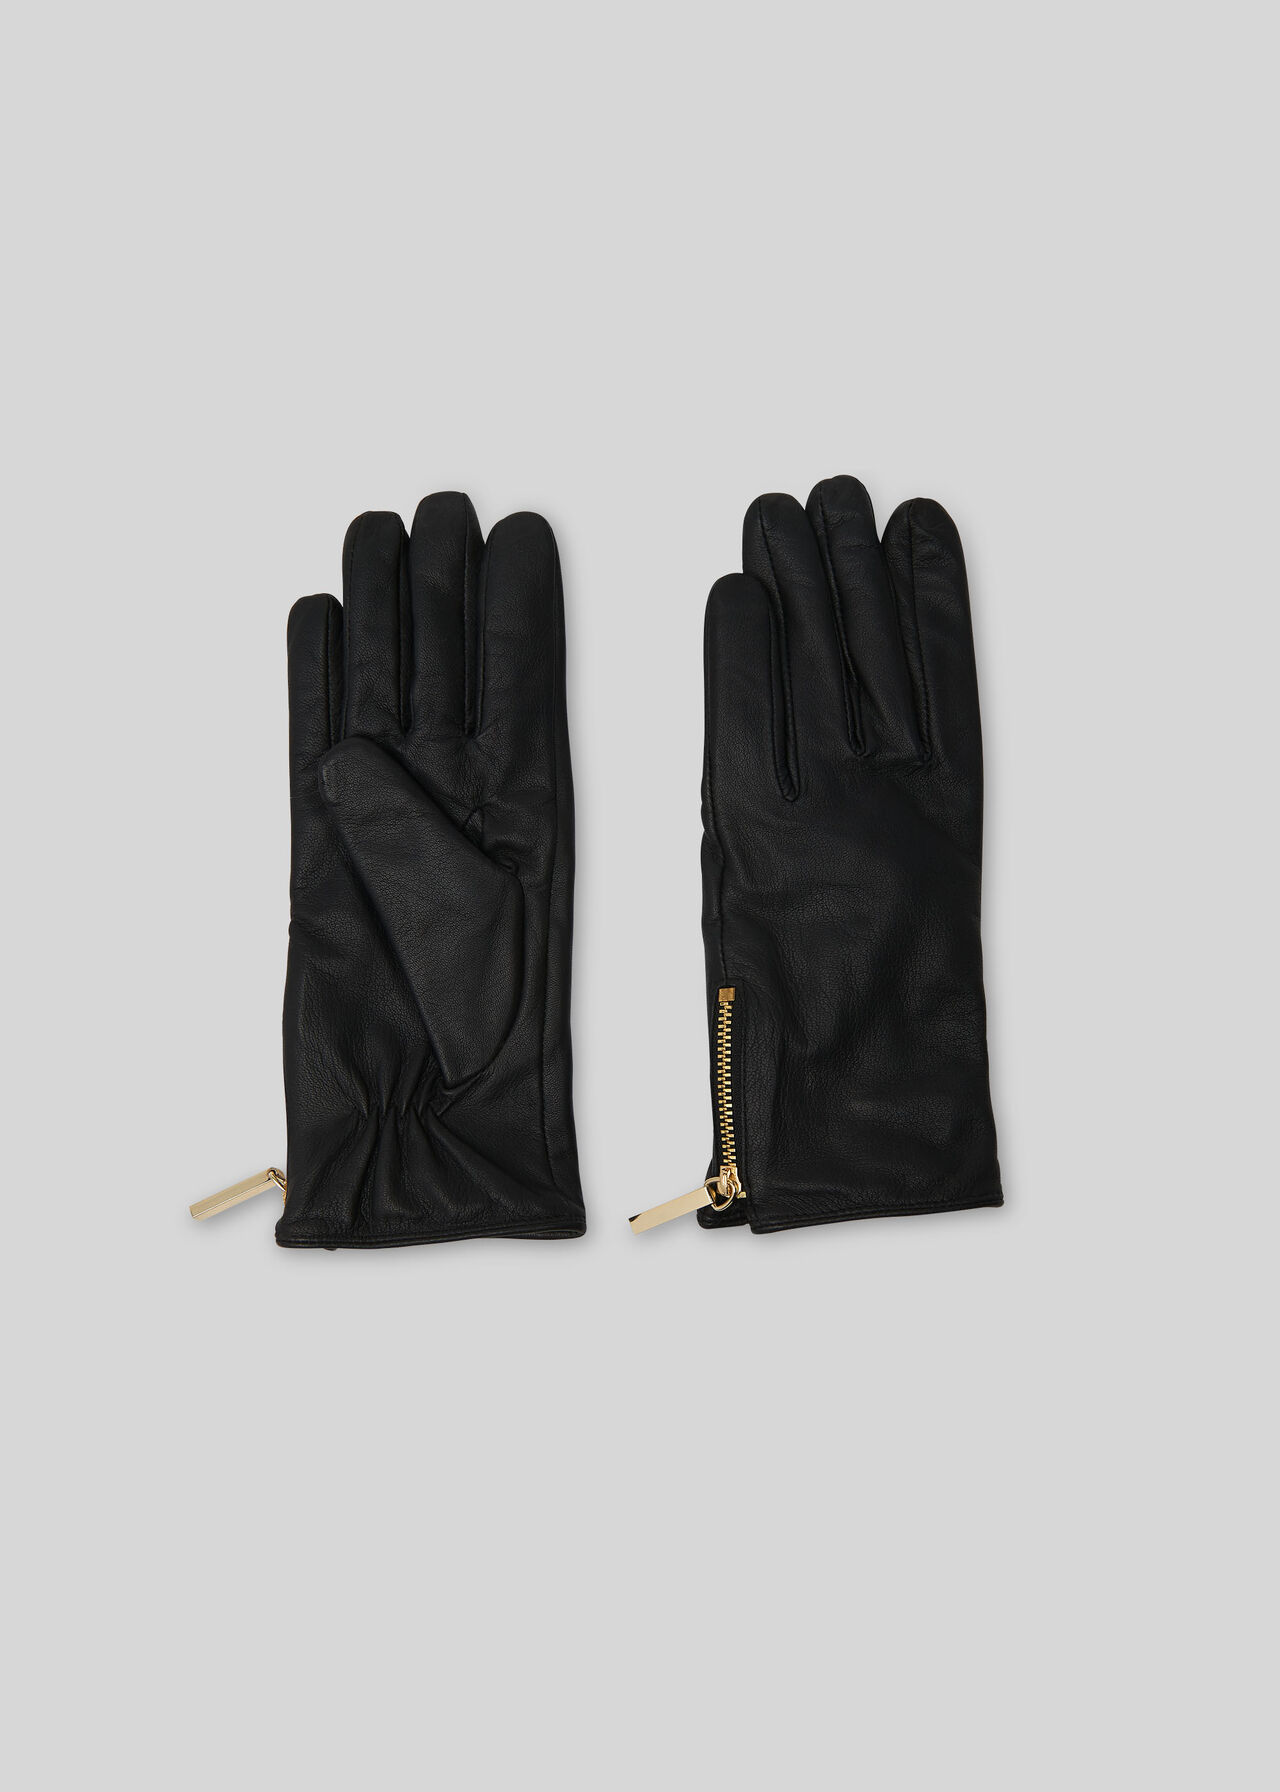 Zip Detail Leather Glove Black